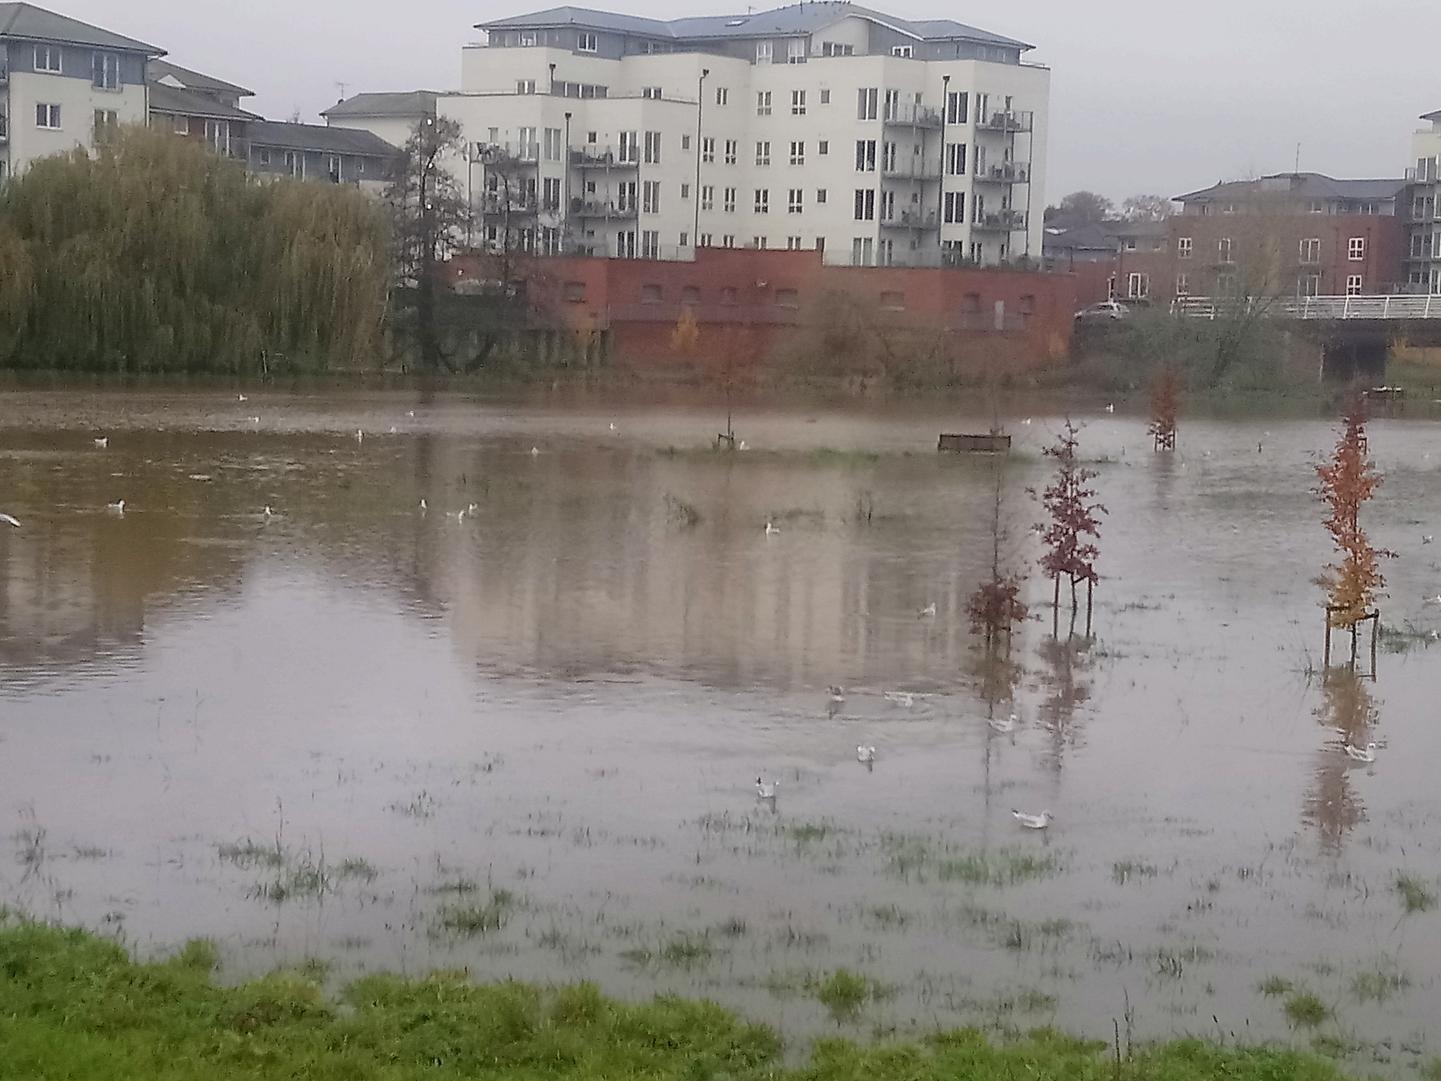 The flood plain near Portobello Bridge in Warwick